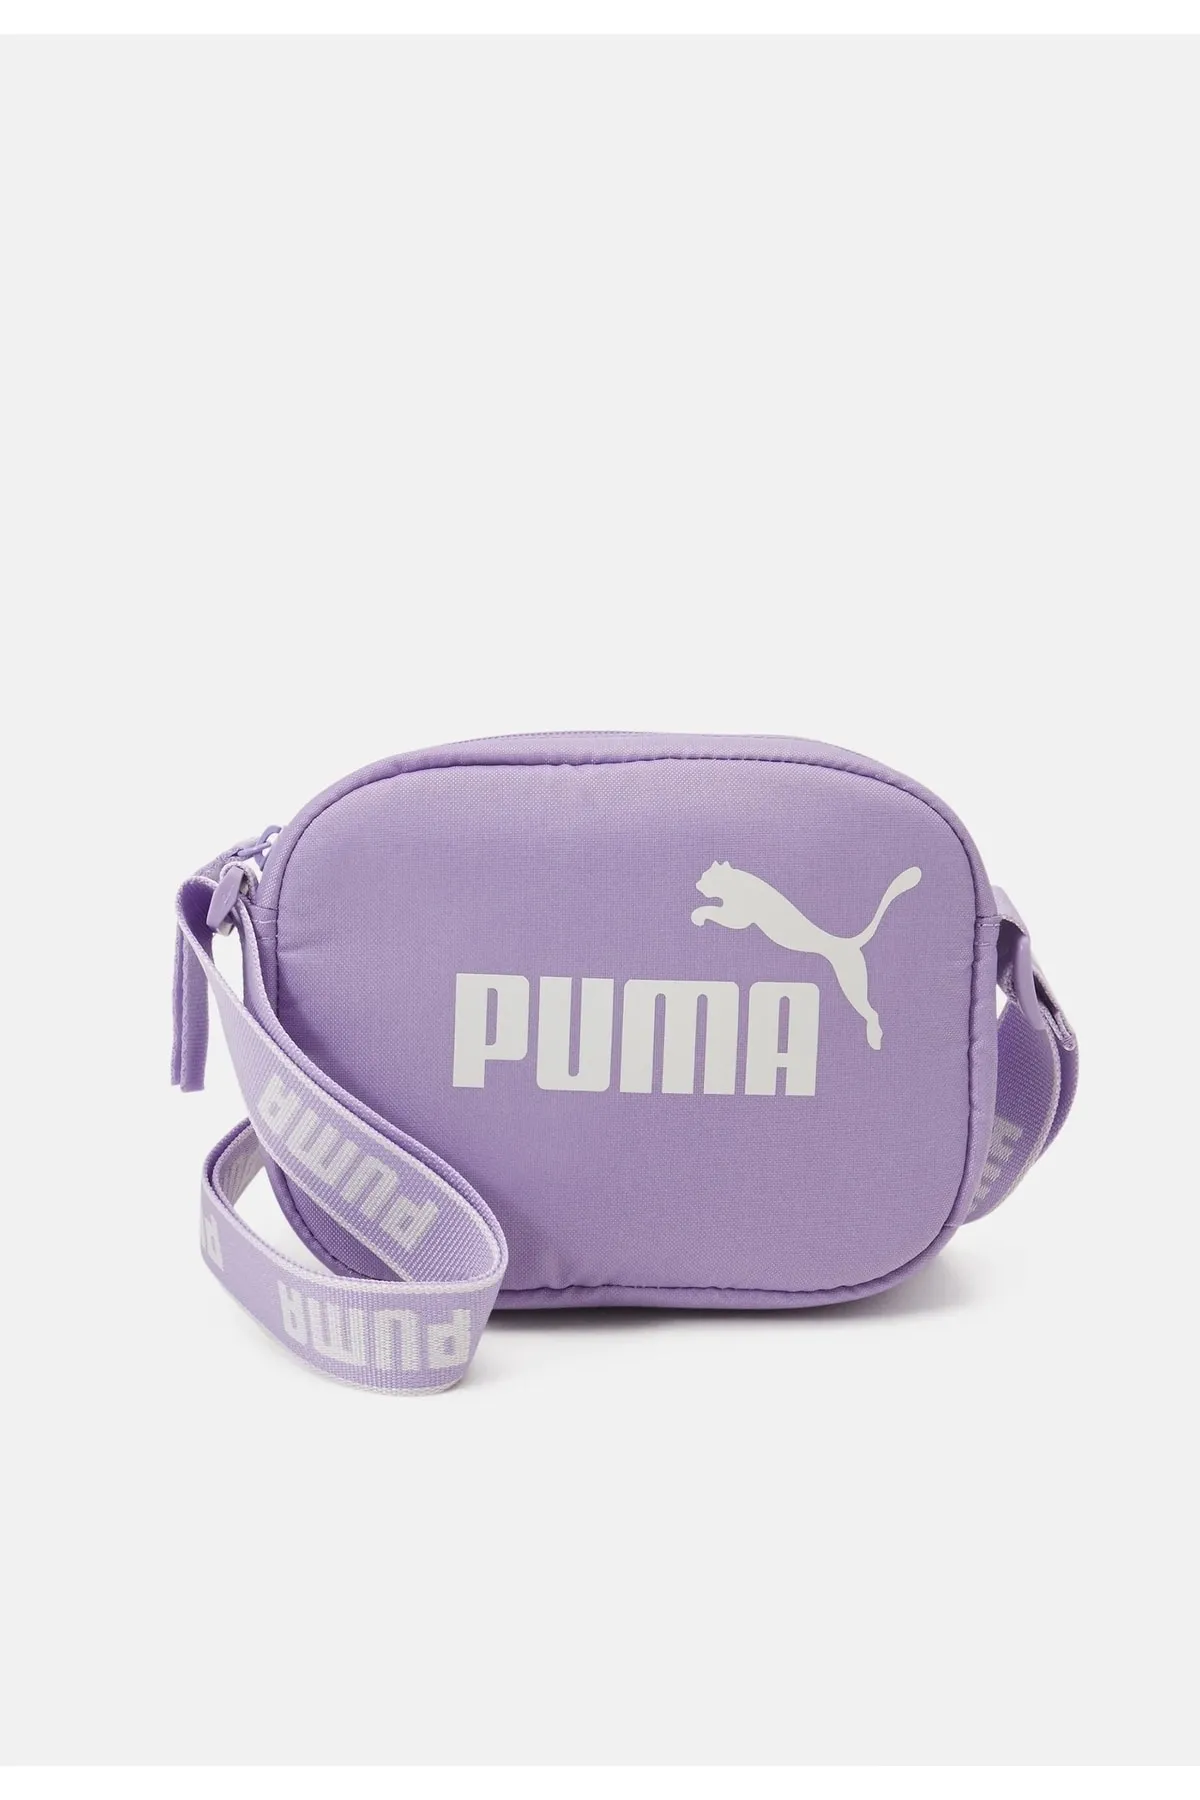 PUMA - Core Base Cross Body Bag 07946802-Violet